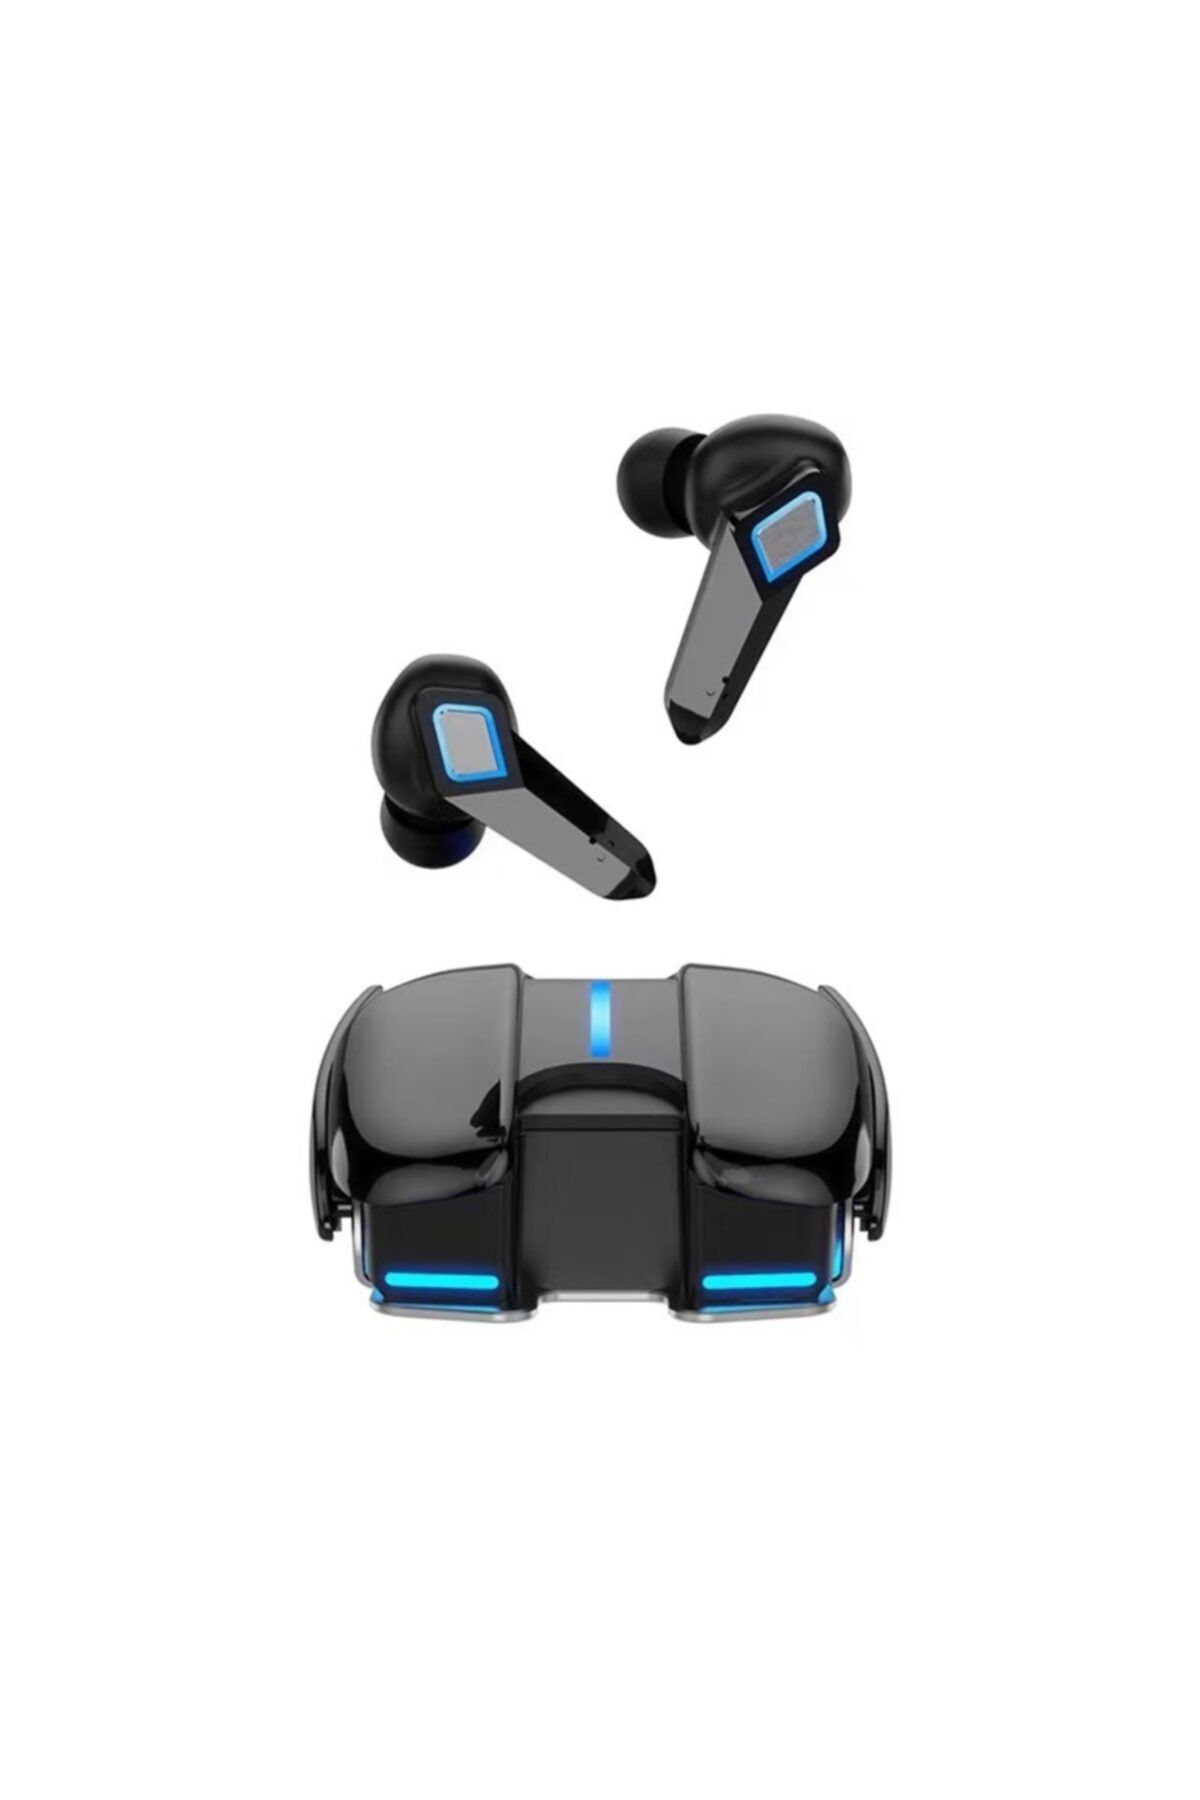 Deilmi Işıklı Oyuncu Kulaklığı Mikrofonlu Kablosuz Bluetooth Kulaklık Db-02 Bluetooth V5.0